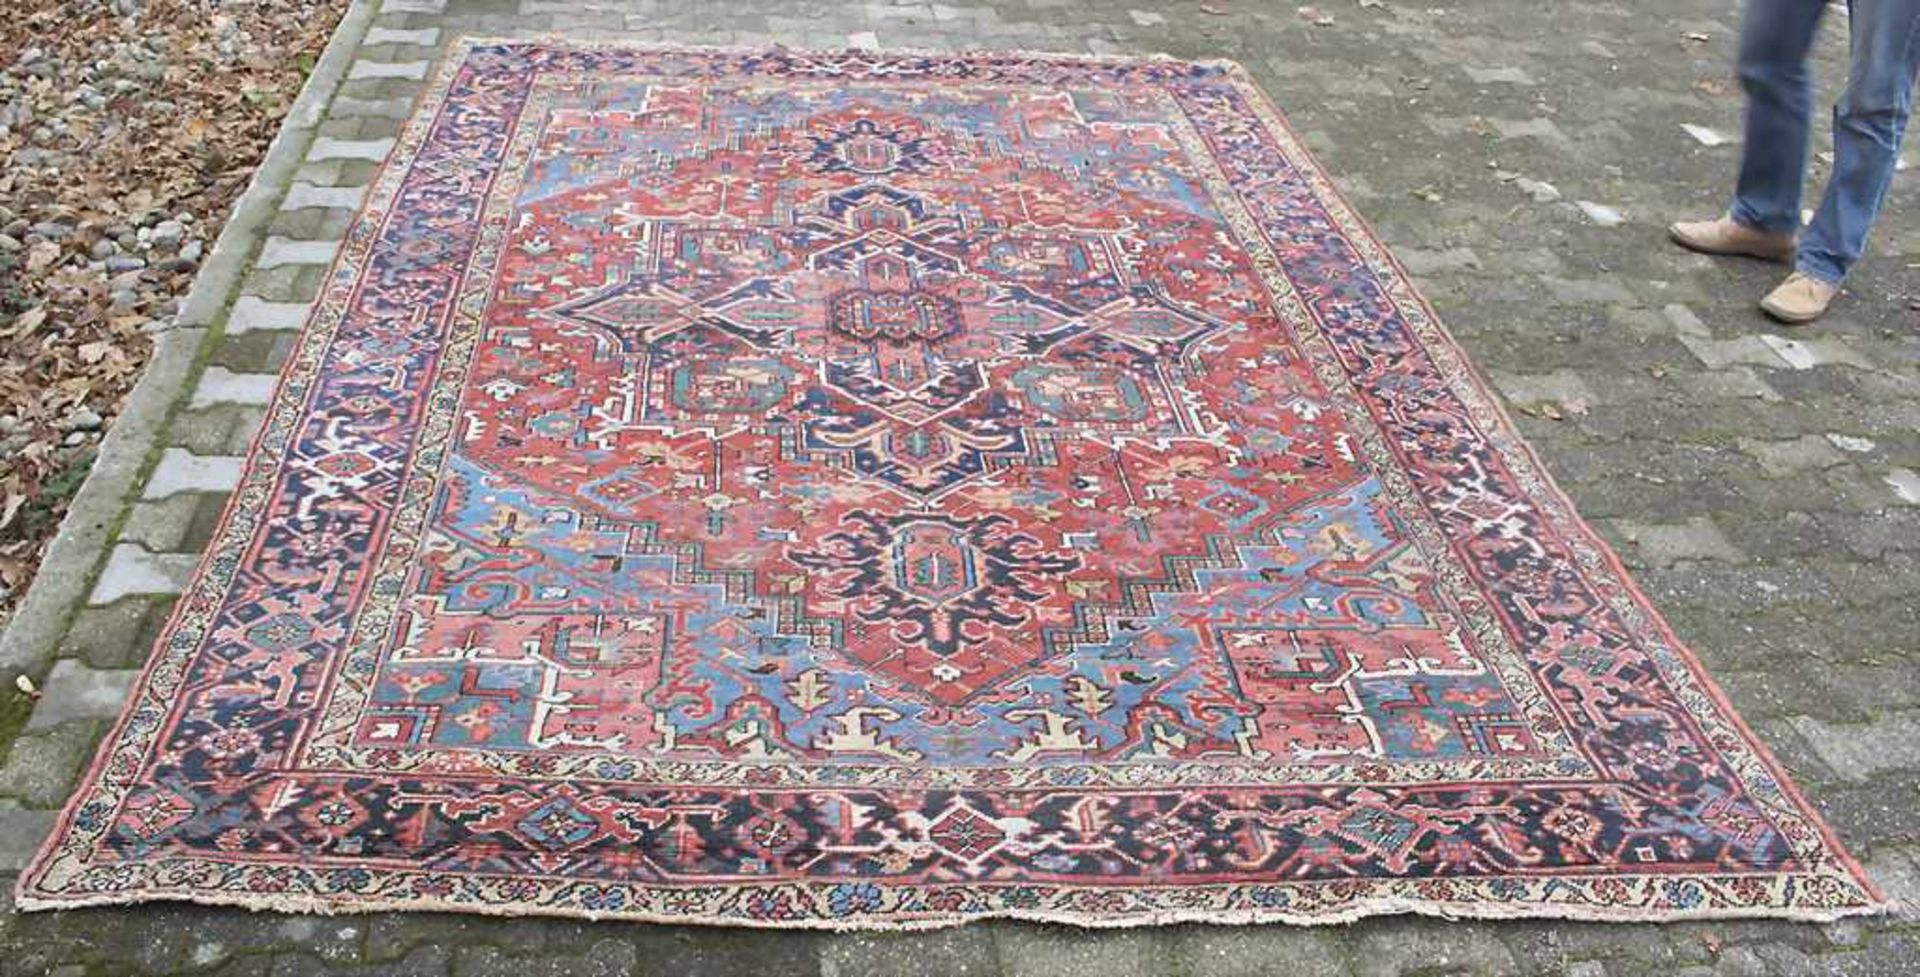 Orientteppich 'Heriz' / An oriental carpet 'Heriz'Material: Wolle, Maße: 330 x 220 cm, Zustand: gut,